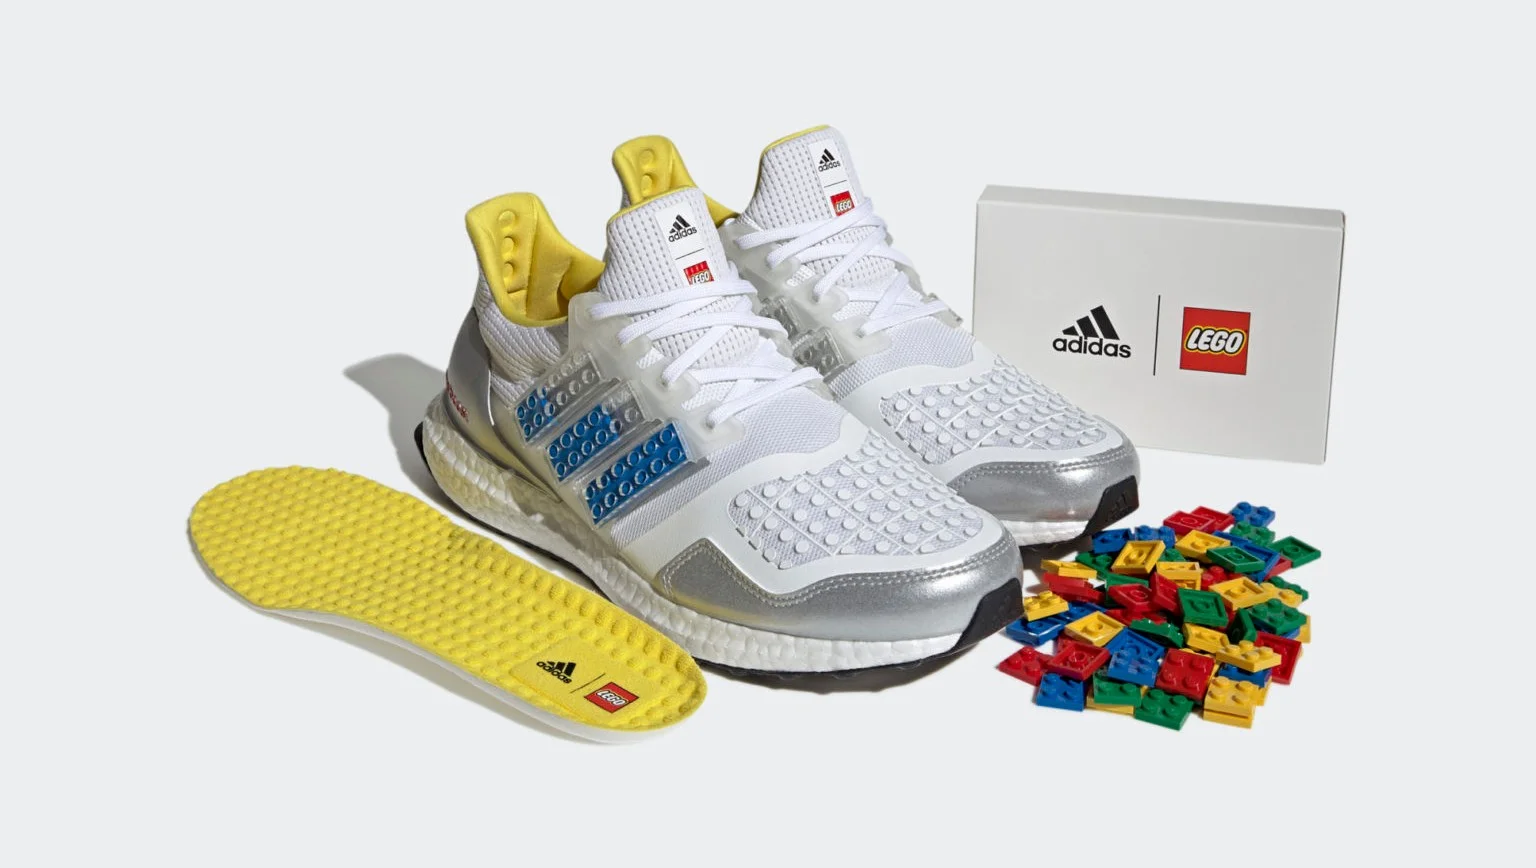 Adidas представил кроссовки в коллаборации с LEGO - фото 1